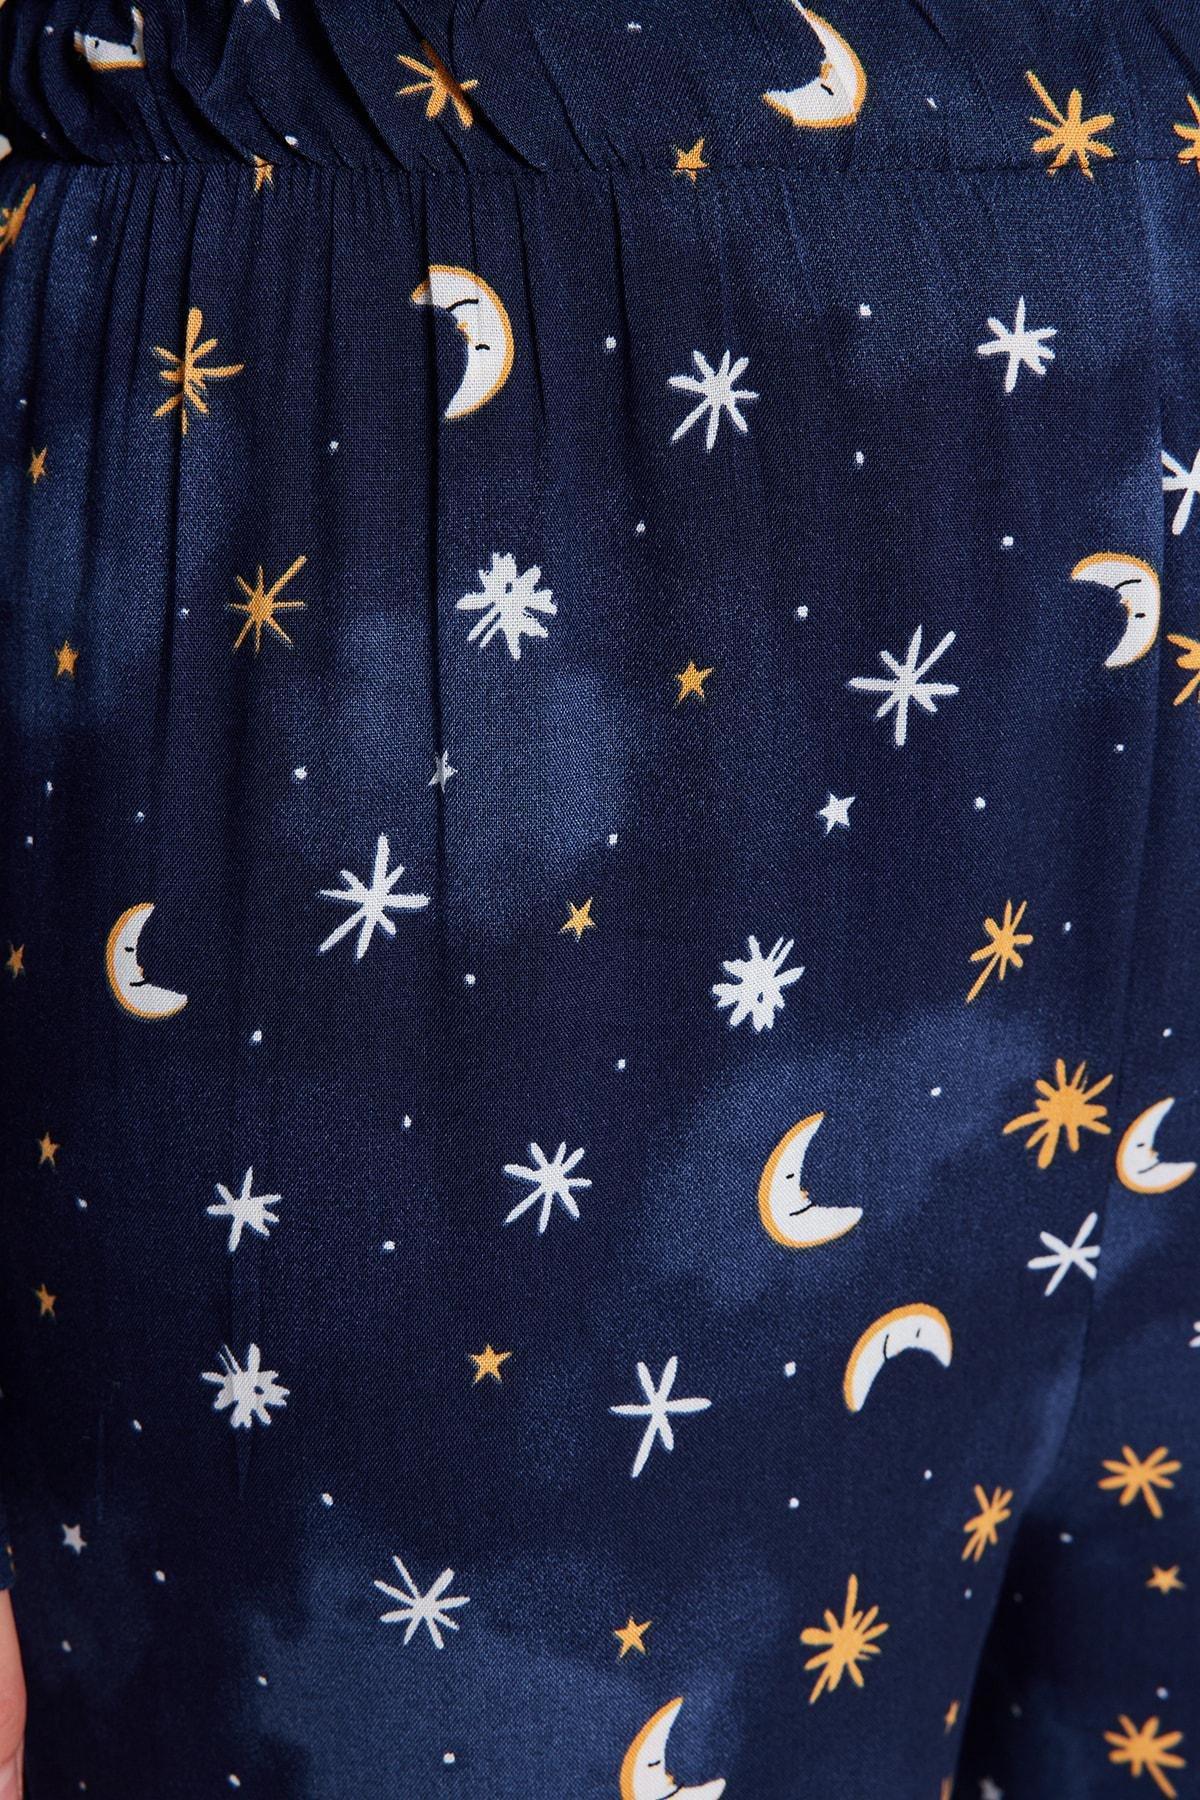 Trendyol - Blue Galaxy Patterned Woven Pyjamas Set